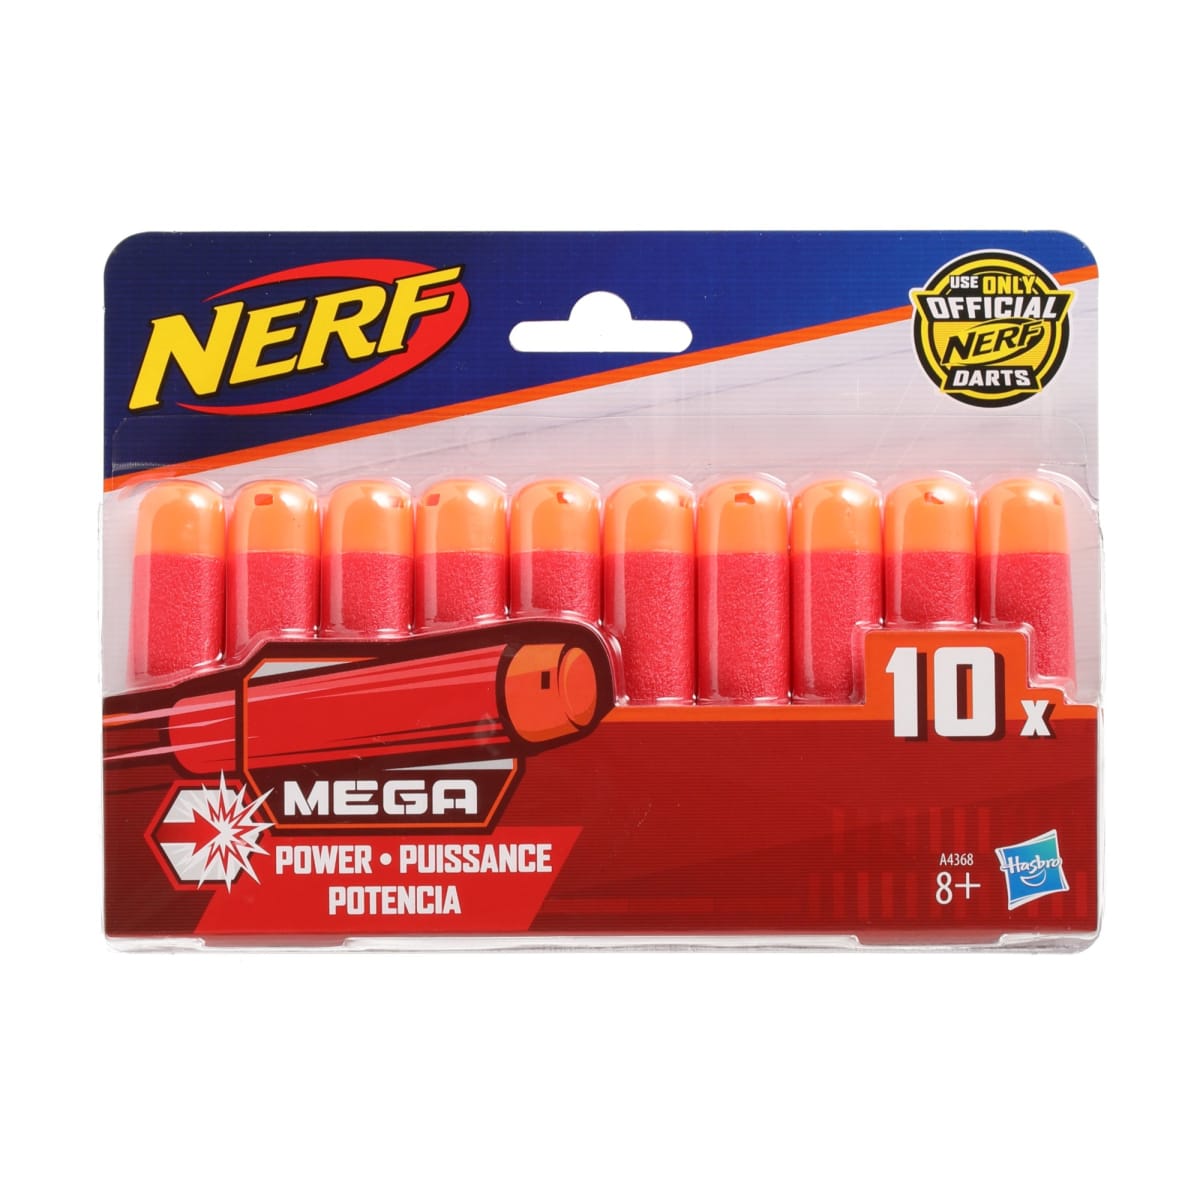 Nerf Mega Darts